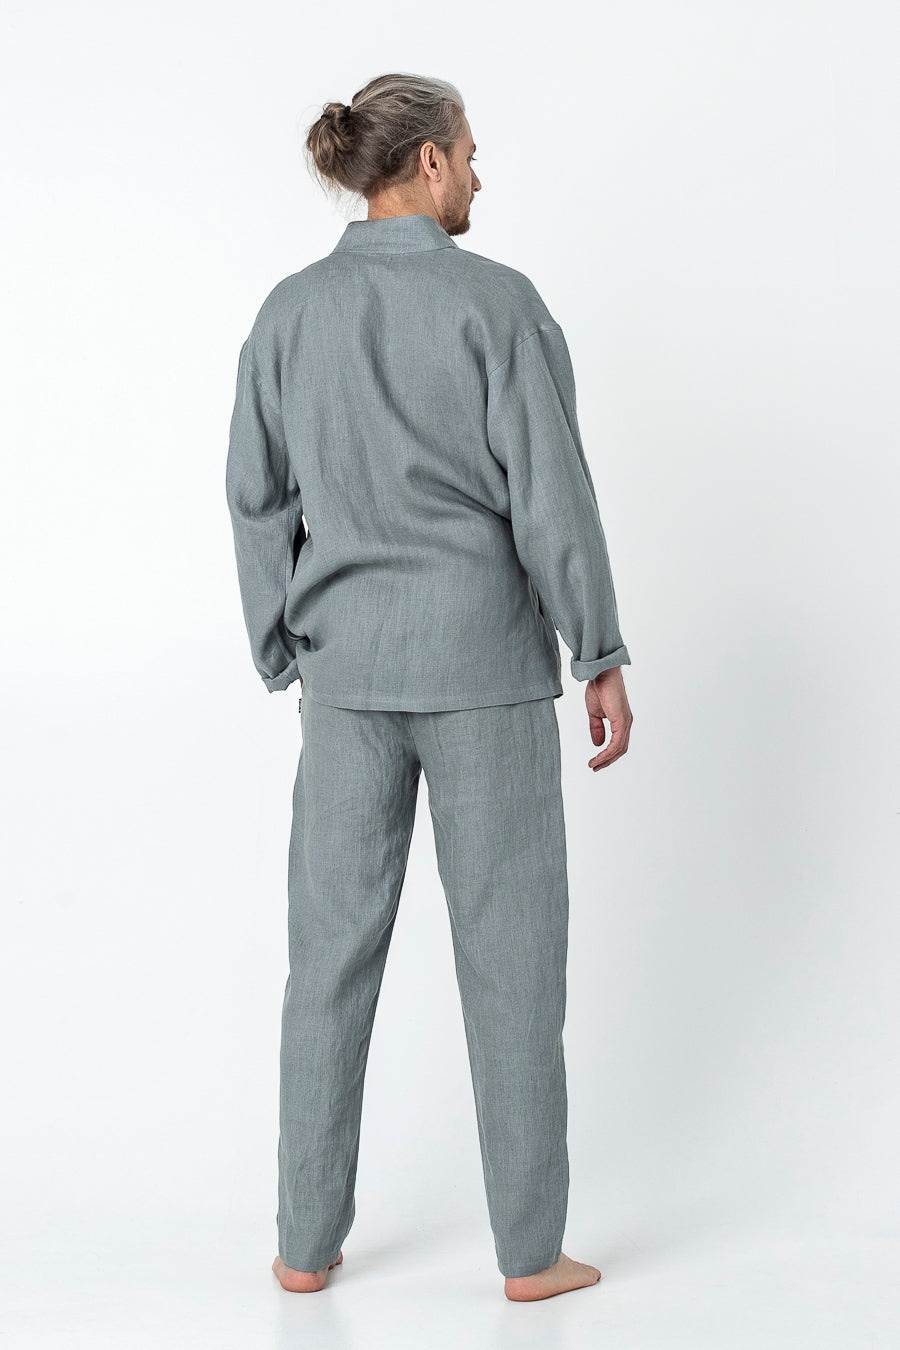 BOTAN | Linen jacket for men - Mezzoroni